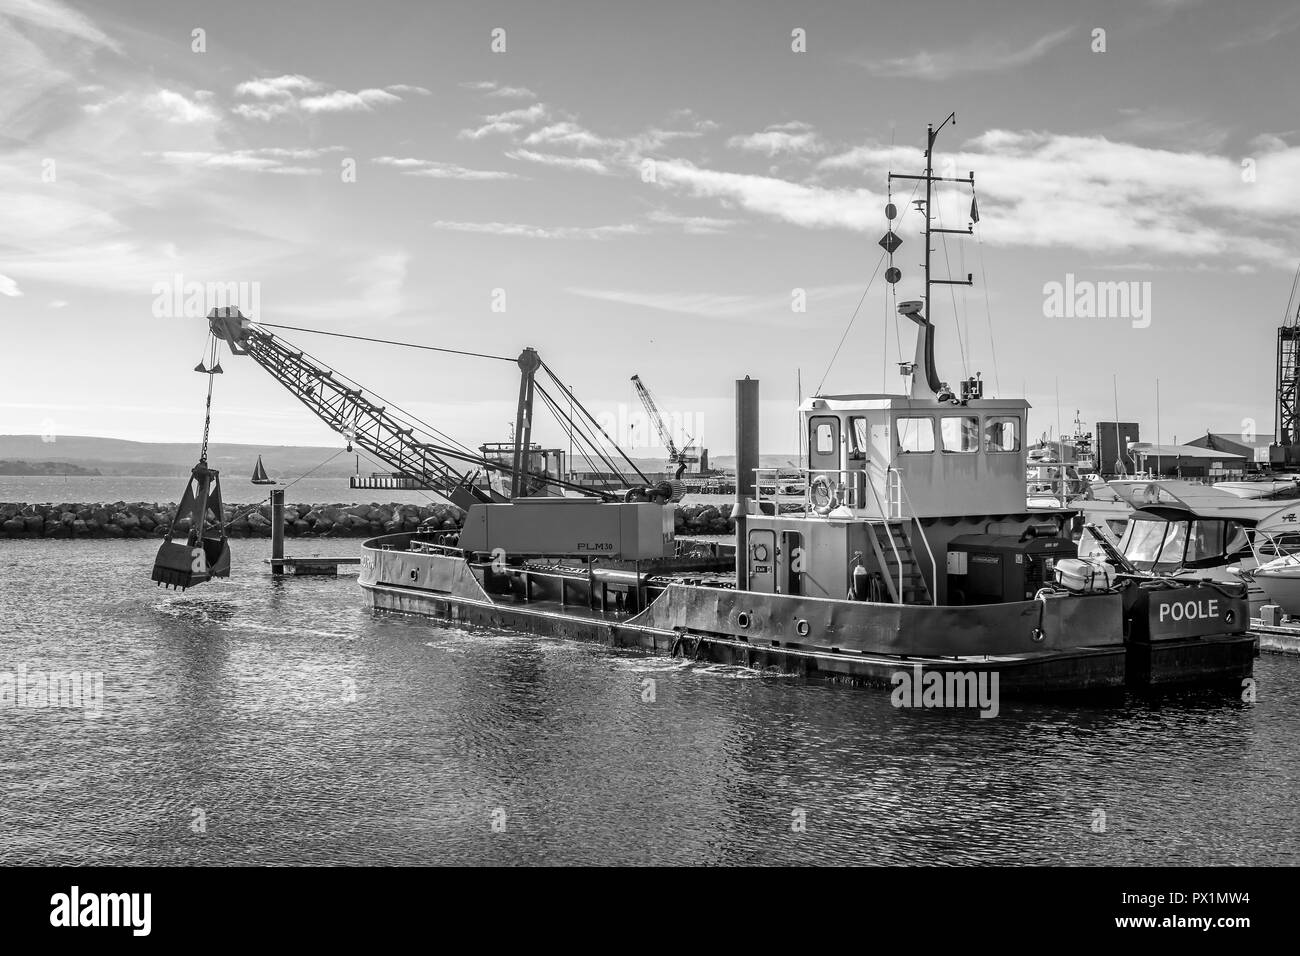 Grab Dredger C H Horn at work dredging Poole Harbour marina in Dorset, UK on 18 October 2018 Stock Photo